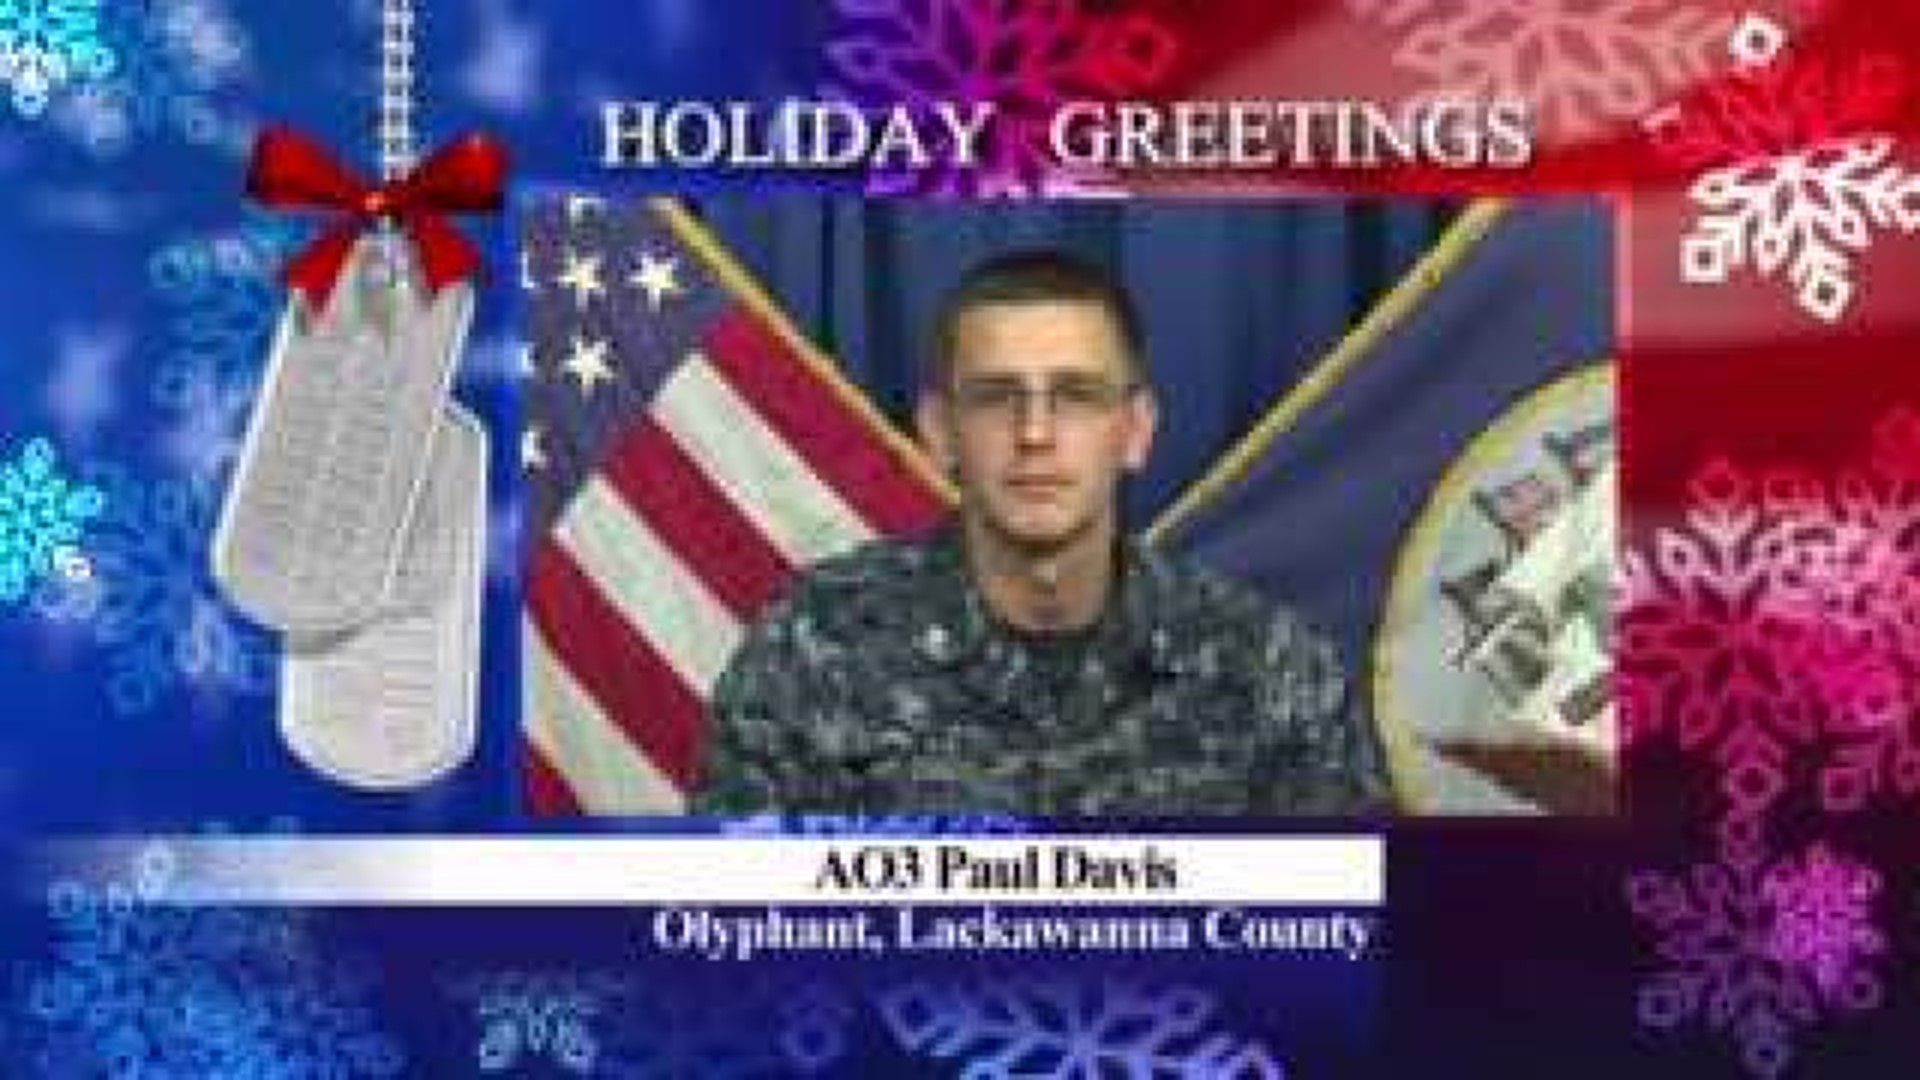 Military Greeting: AO3 Paul Davis